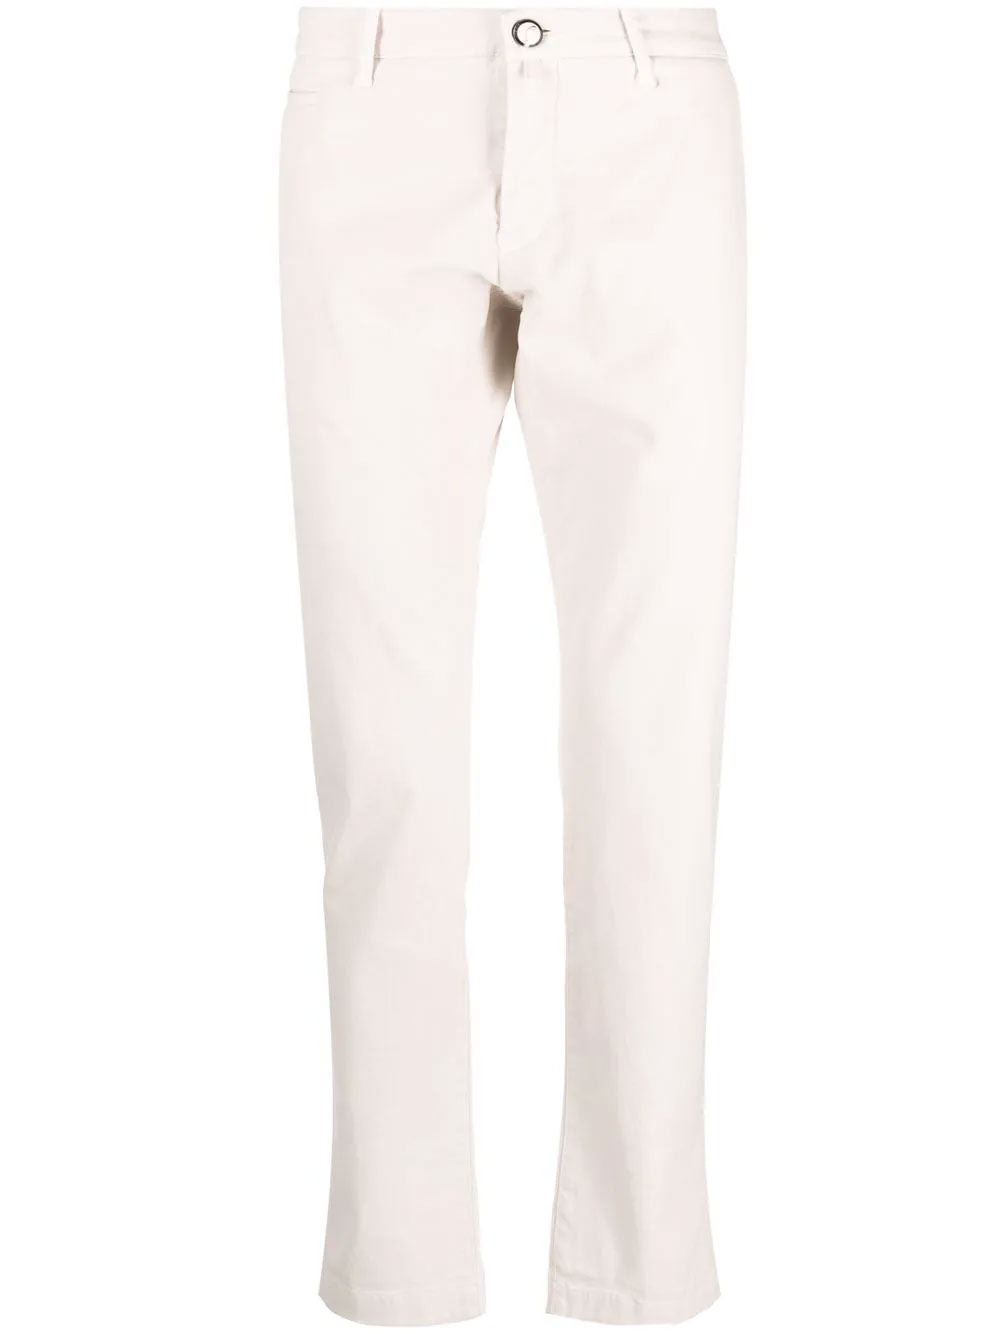 Slim chino trousers in stone beige cotton